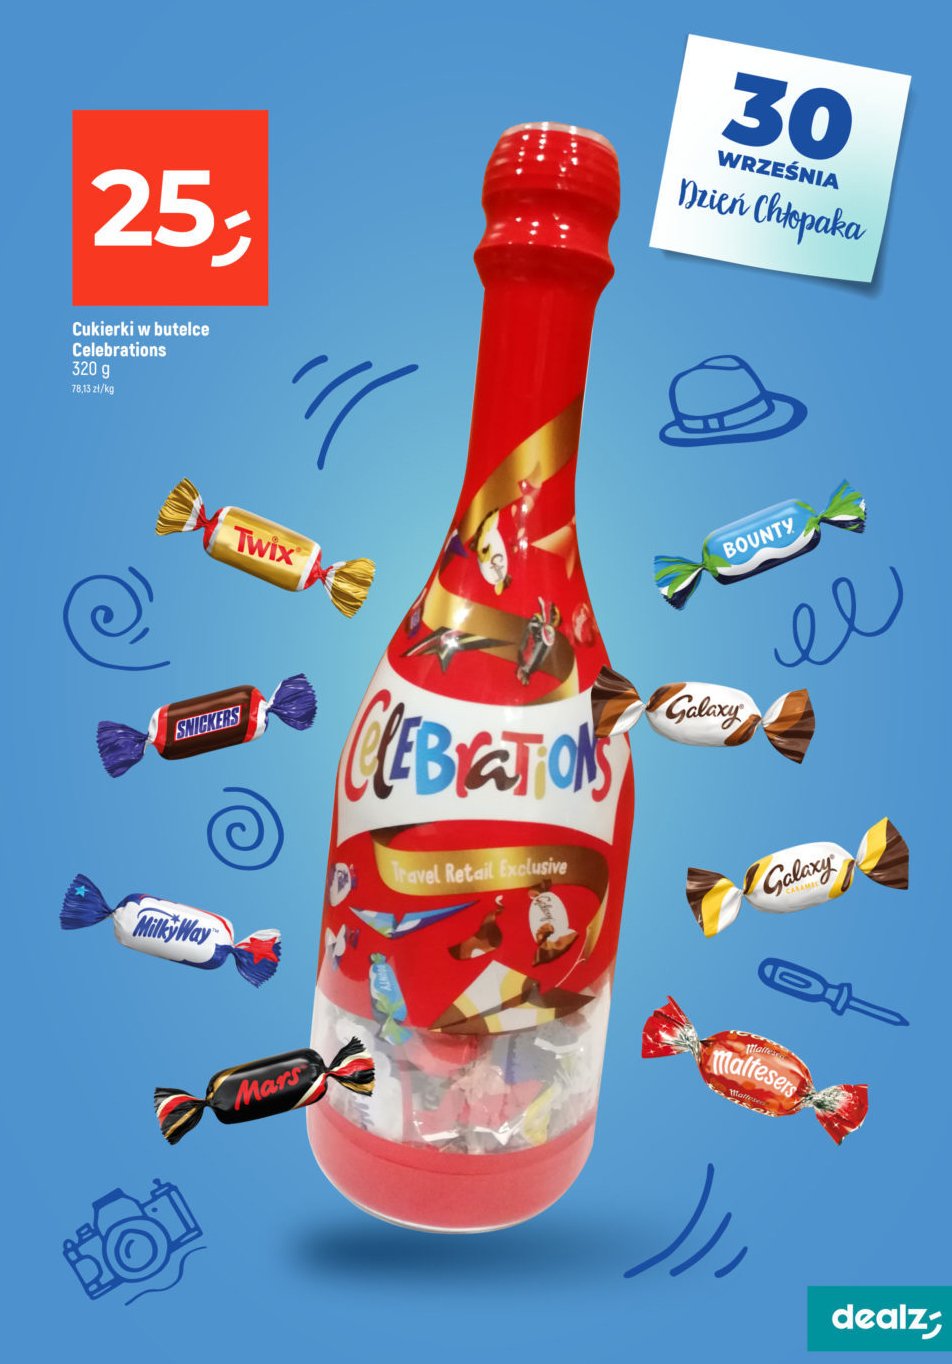 Cukierki mix w butelce Celebrations promocja